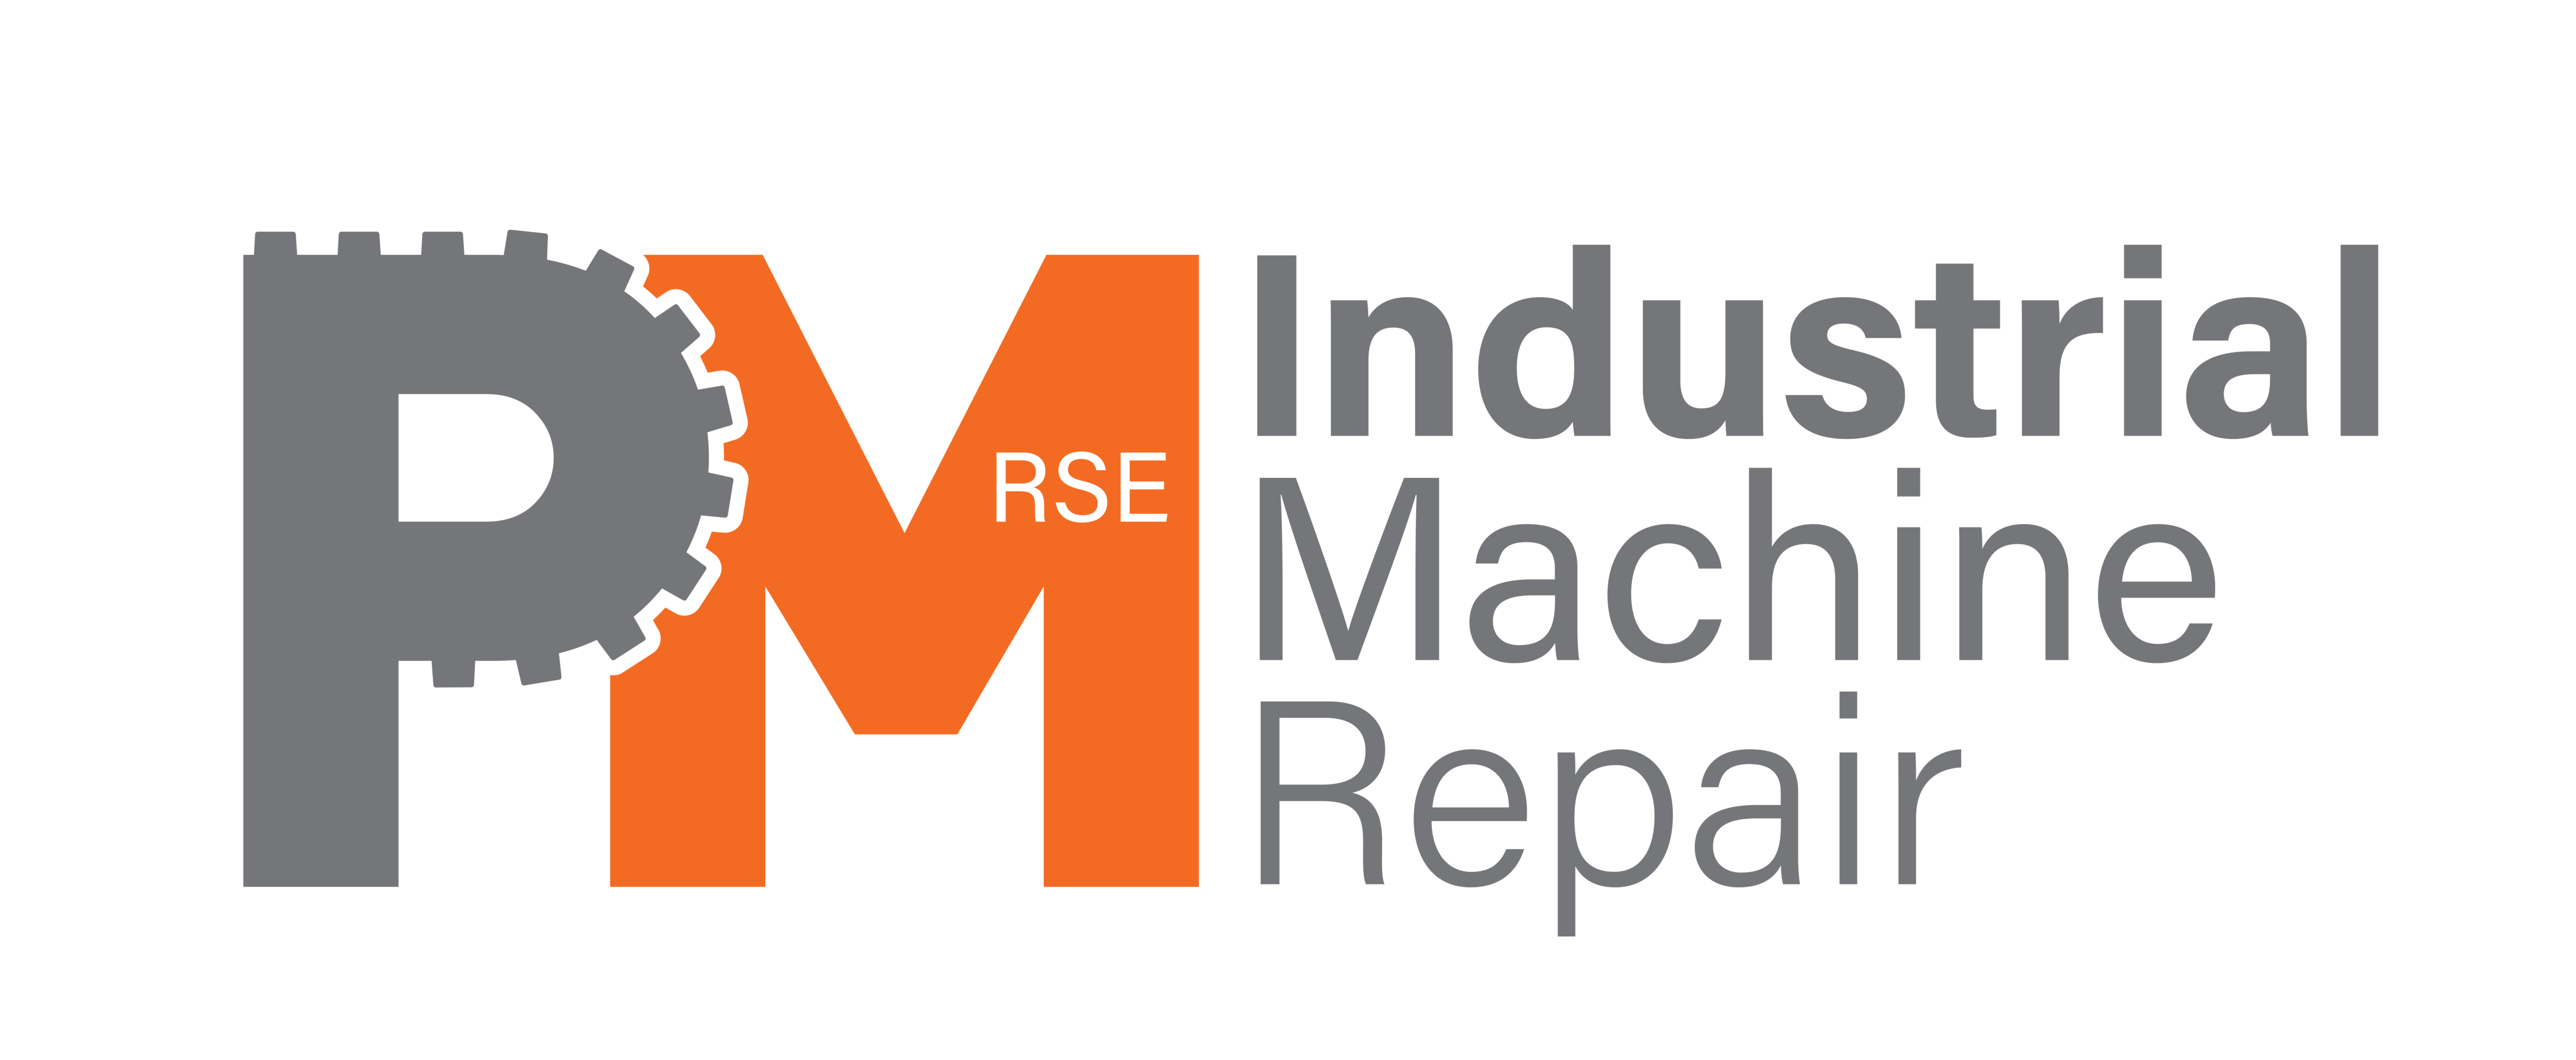 PM Industrial Machine Repair